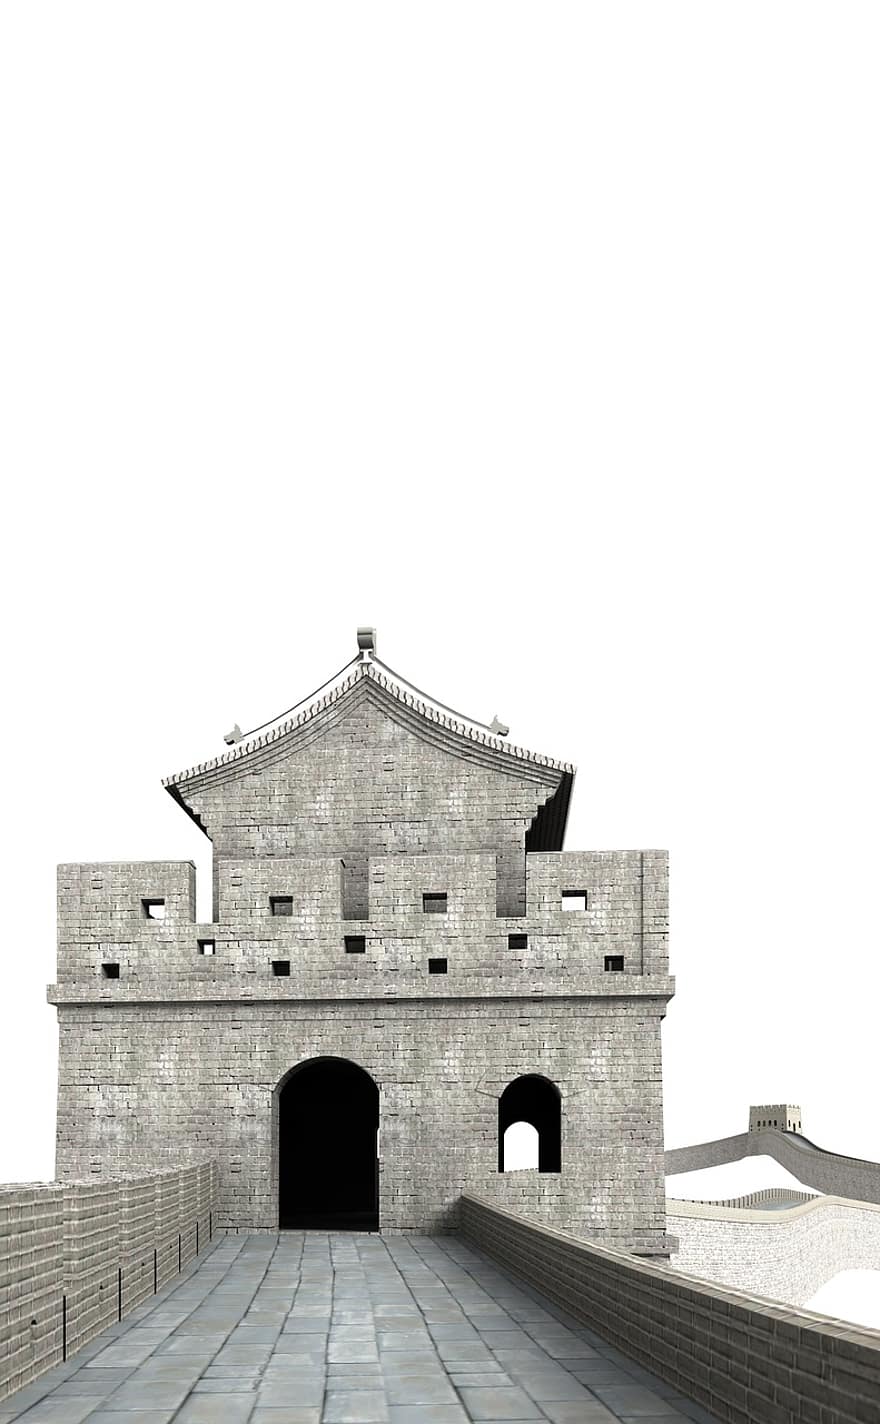 besar, dinding, Cina, bangunan, gereja, tempat-tempat menarik, secara historis, turis, daya tarik, tengara, fasad